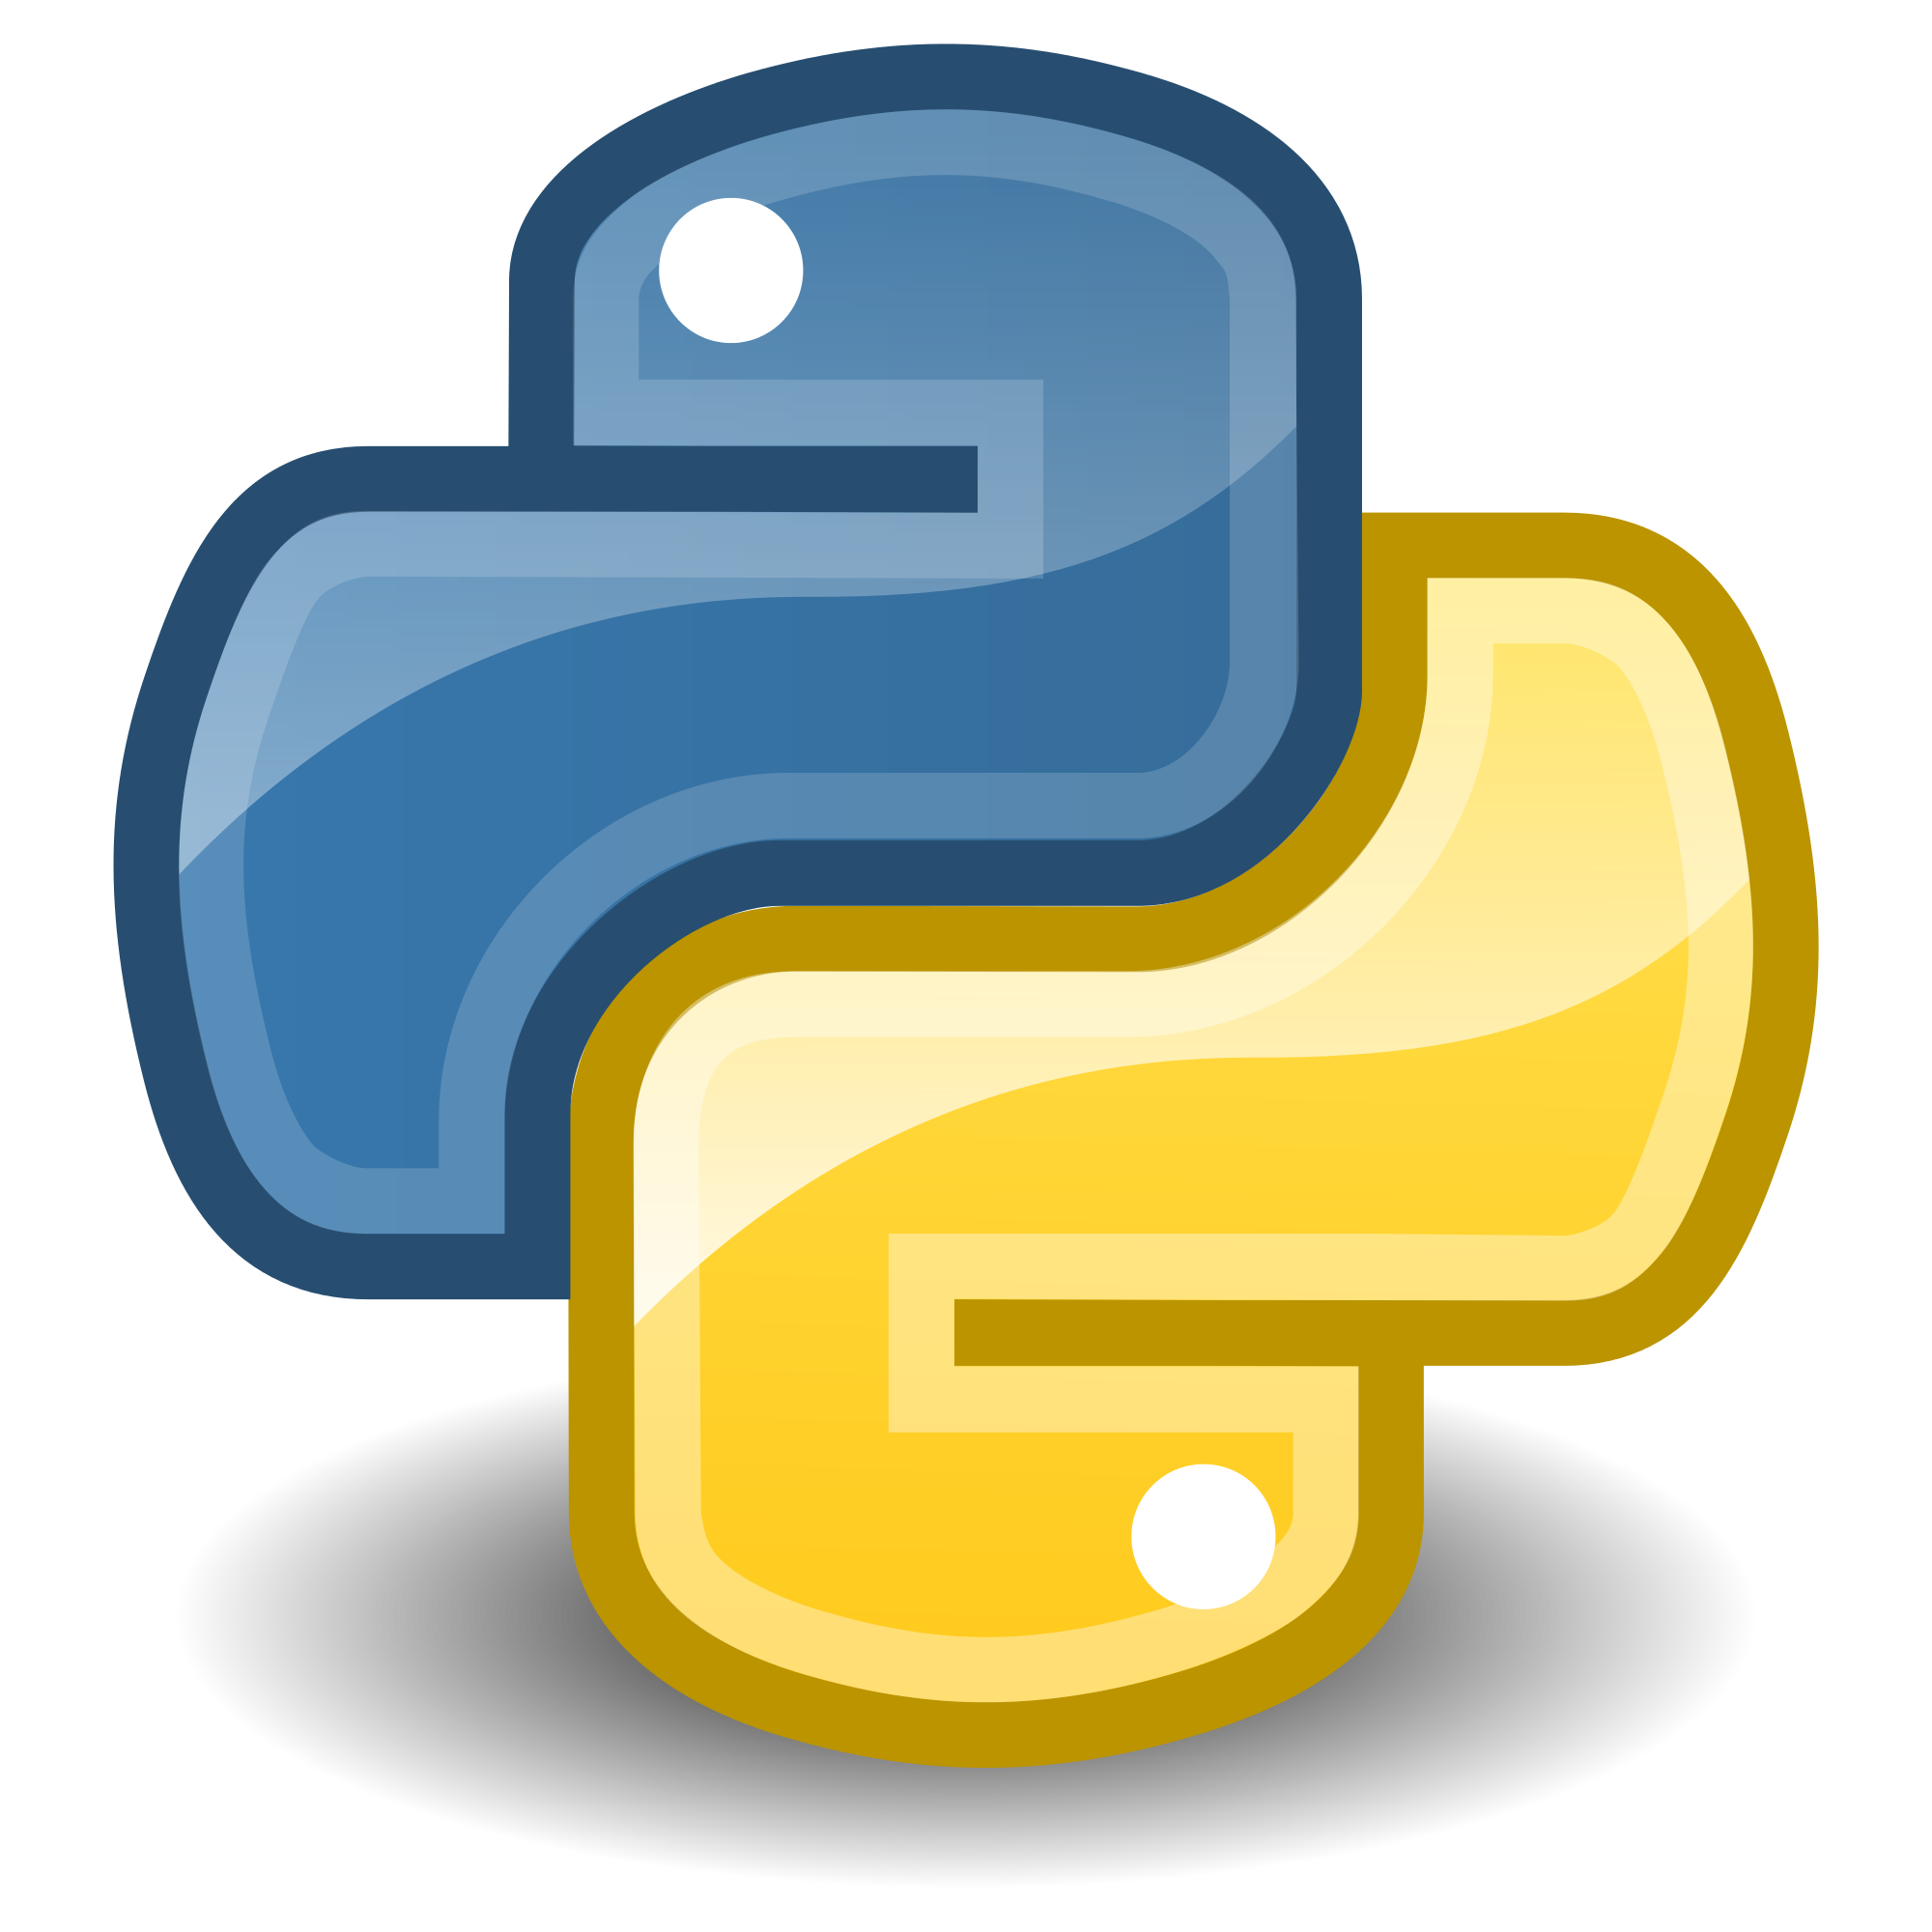 Python Logo PNG Image